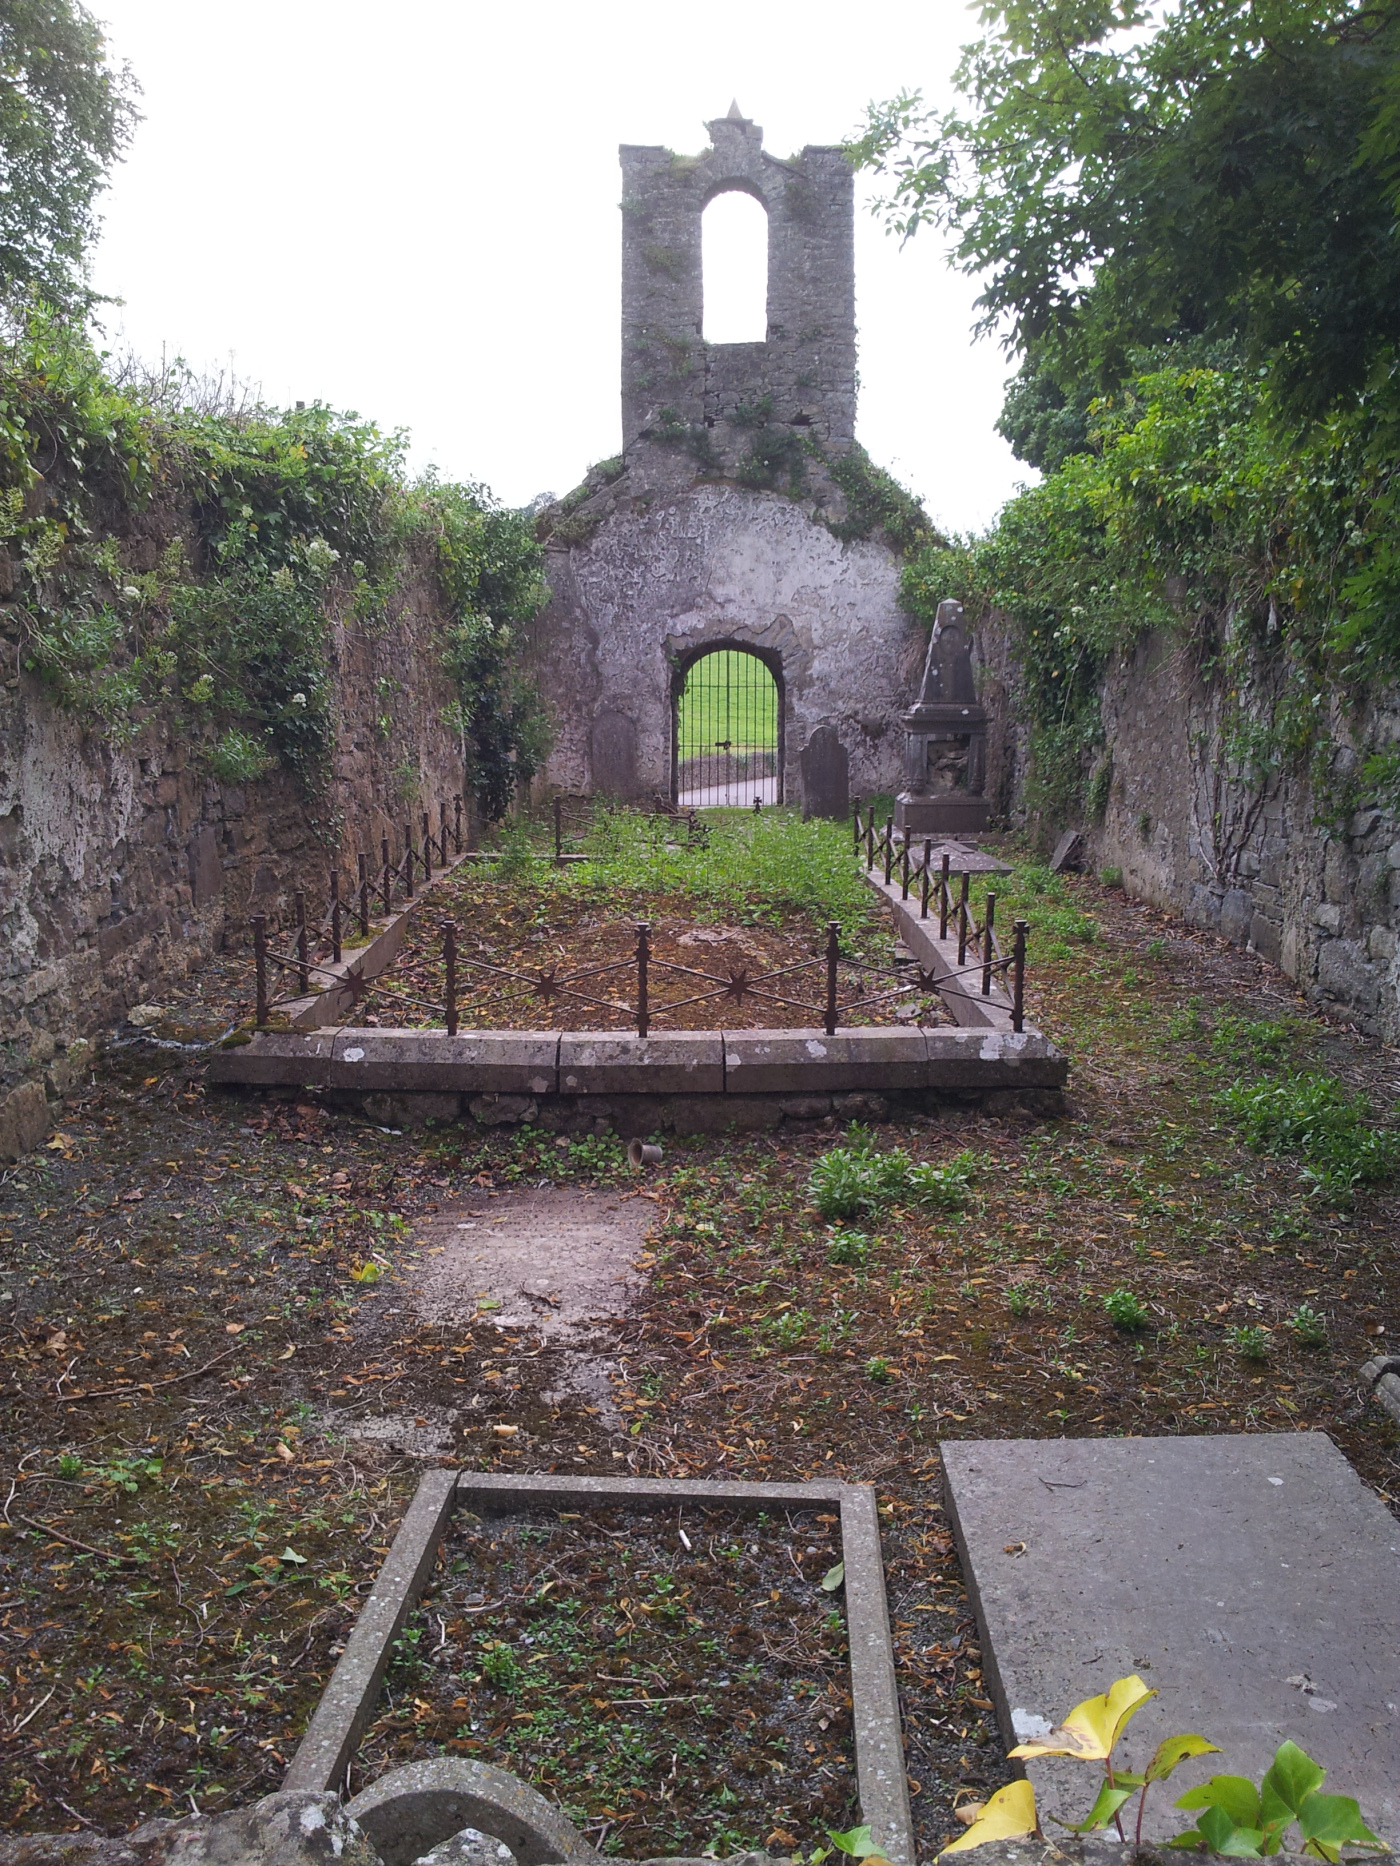 Another interior of St. Kieran's Church, Kells, Kilkenny